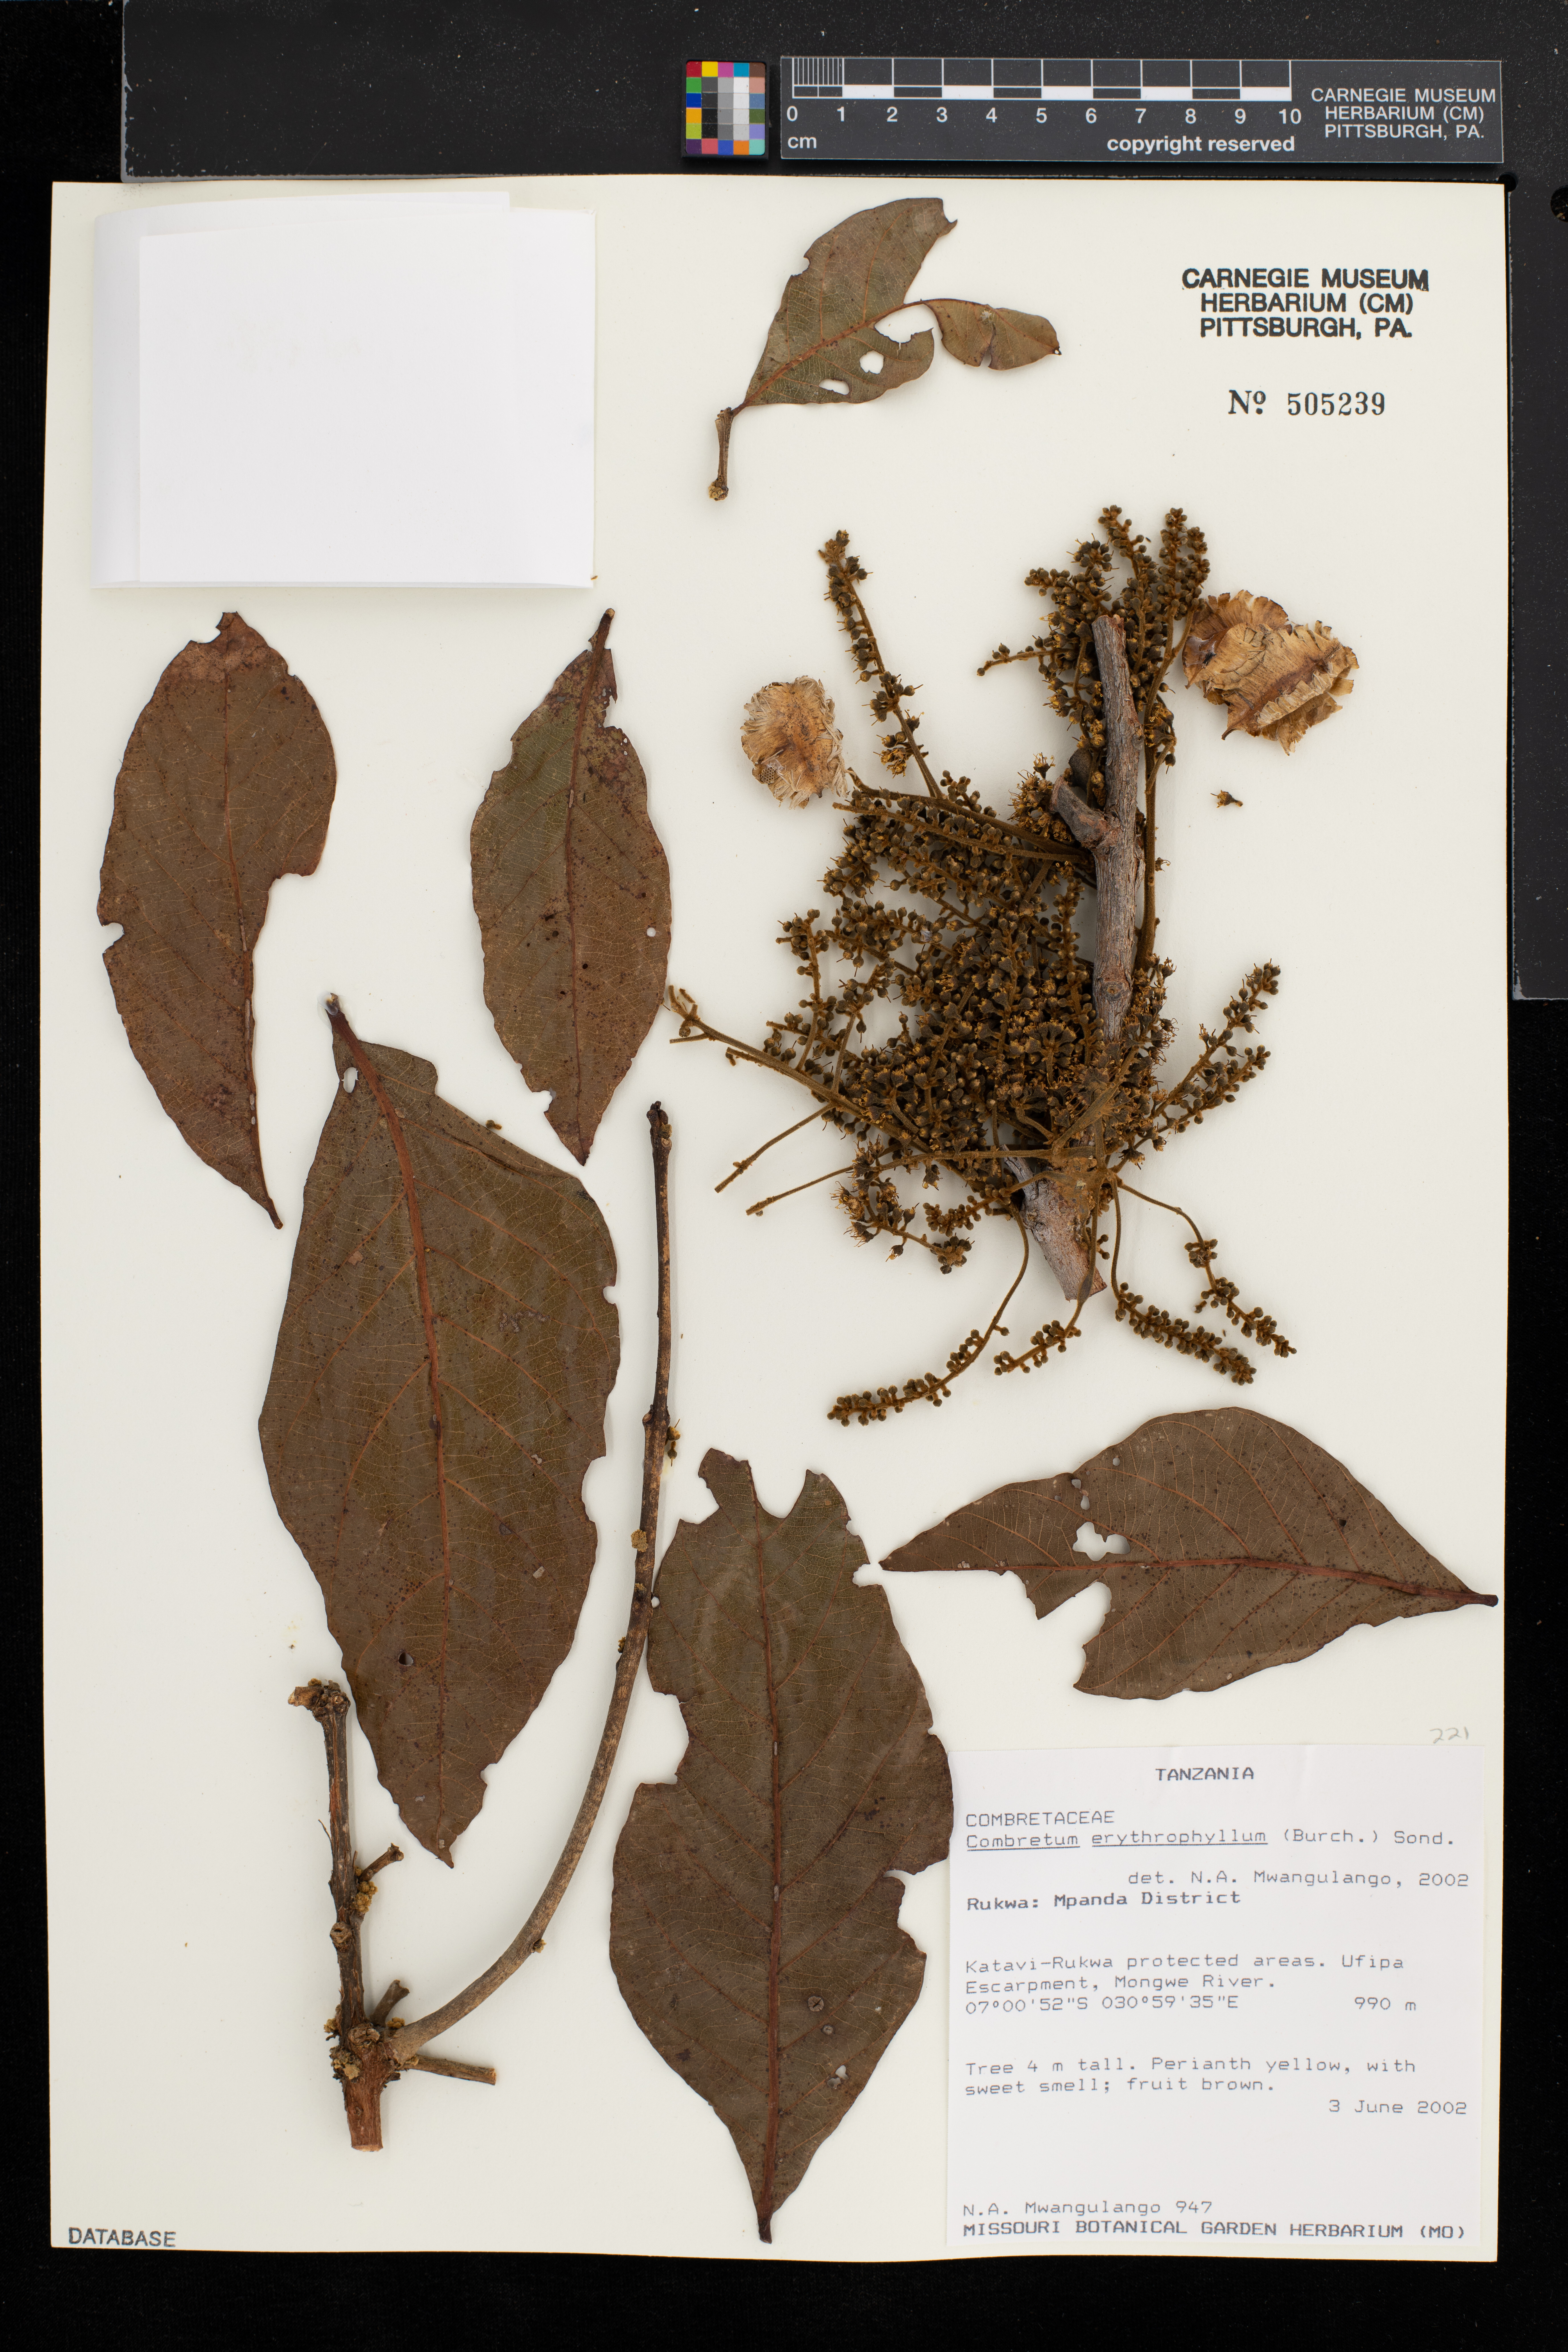 Combretum erythrophyllum image